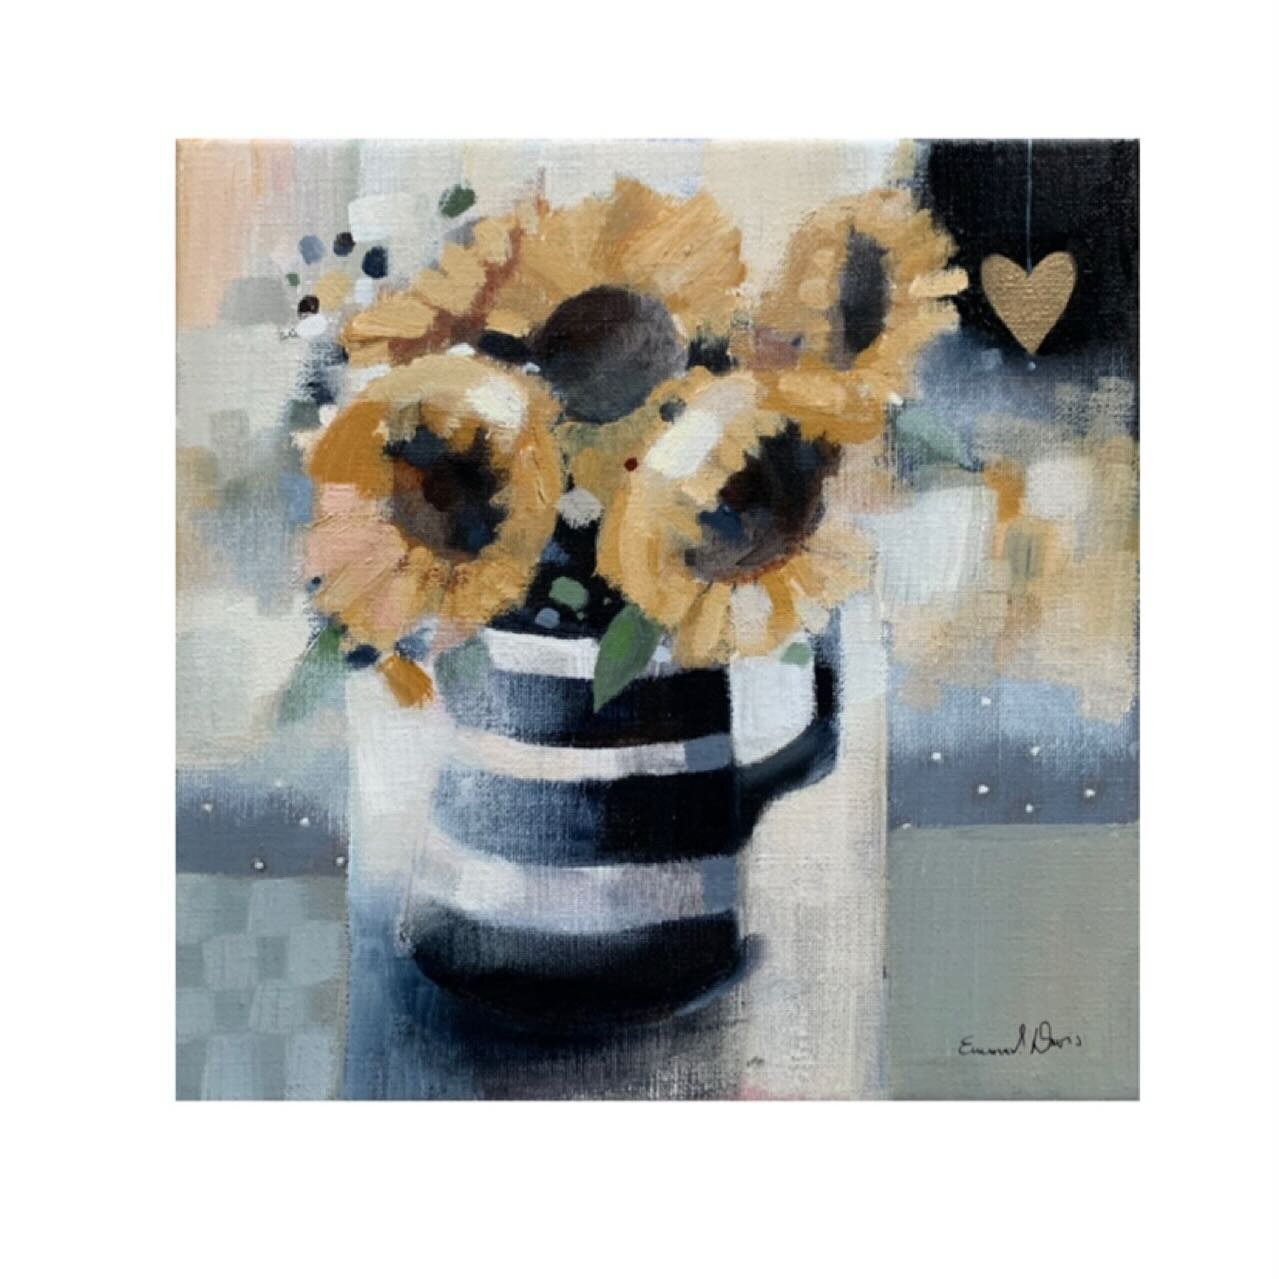 &lsquo;Keep Your Face To Your The Sunshine&rsquo; 
12&rdquo; oil on linen
www.emmasdavisartist.co.uk
.
.
.
#emmasdavis #emmadavisart #emmadavisartist #scottishart #sunflower #sunflowerart #oilpainting #painting #art #wallart #artforinteriors #origina